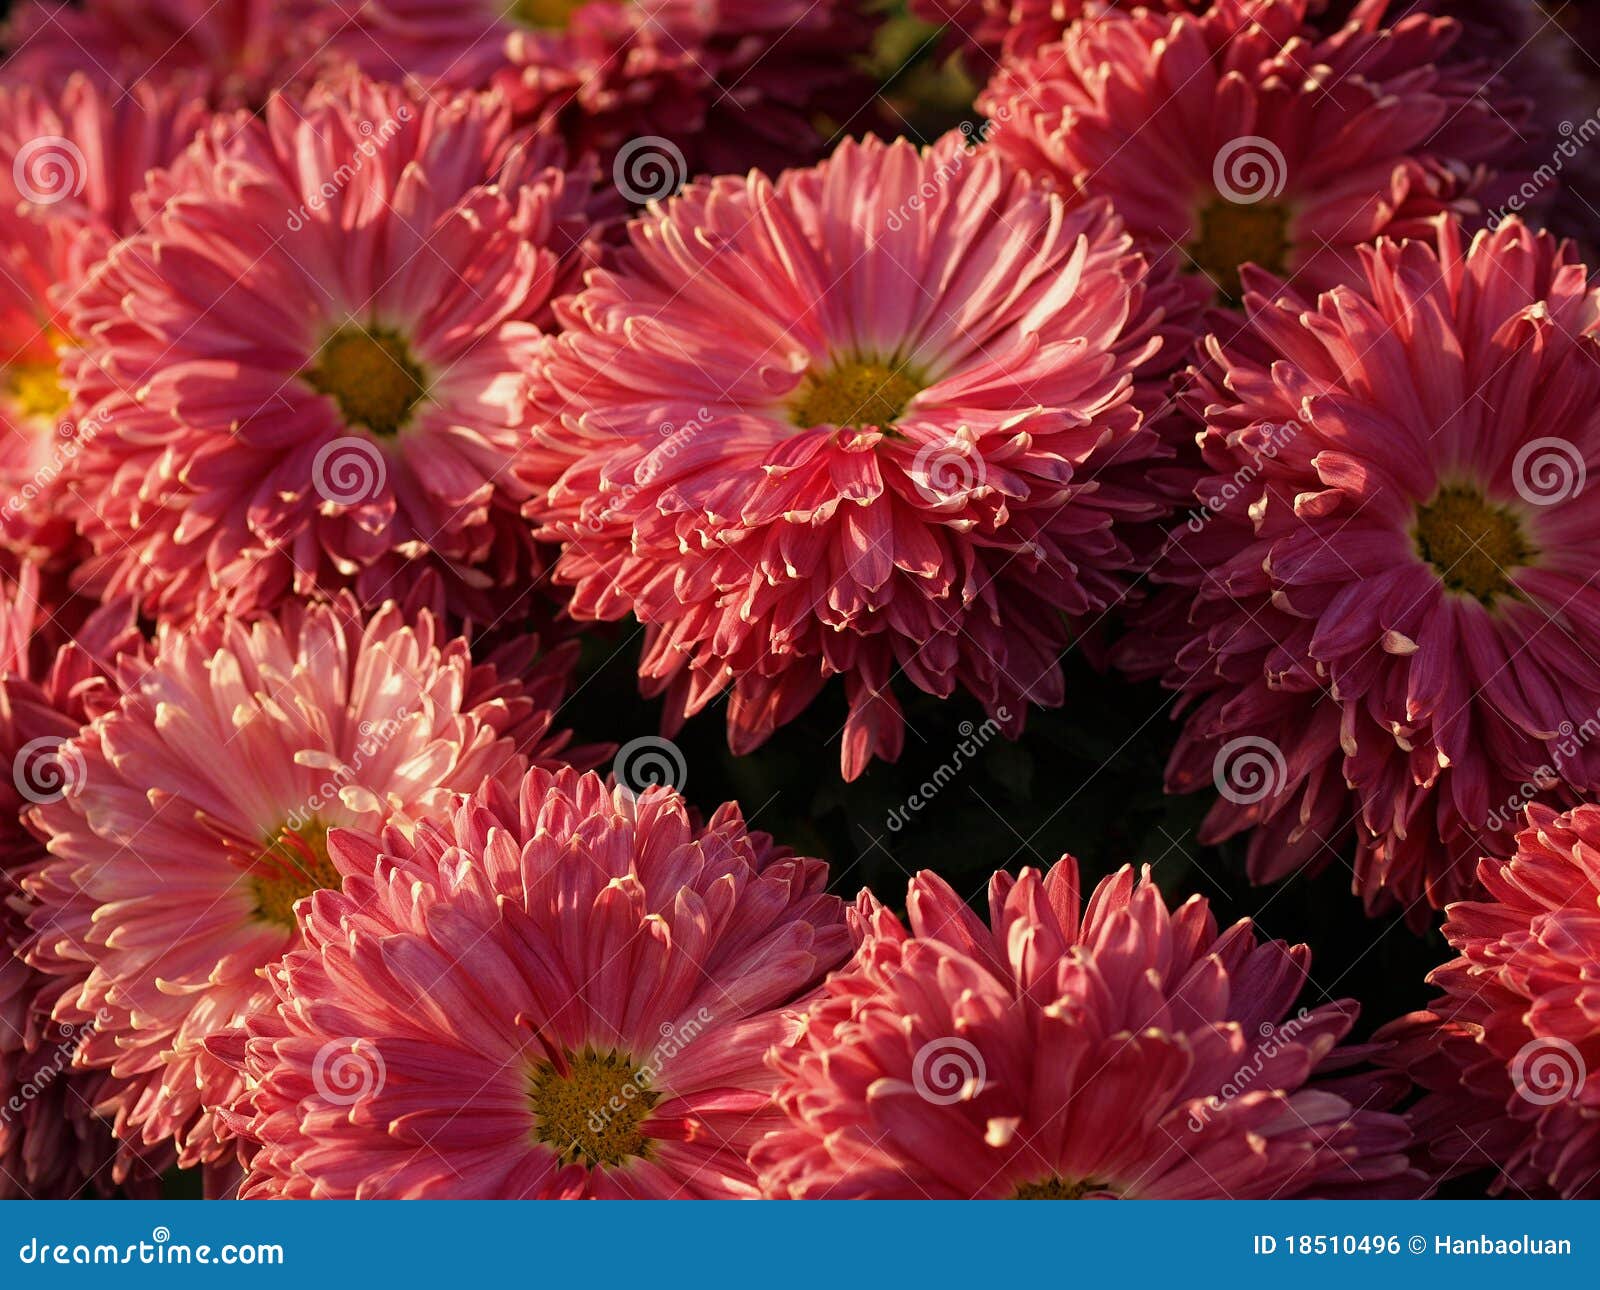 Color Chrysanthemum Royalty Free Stock Image  Image: 18510496